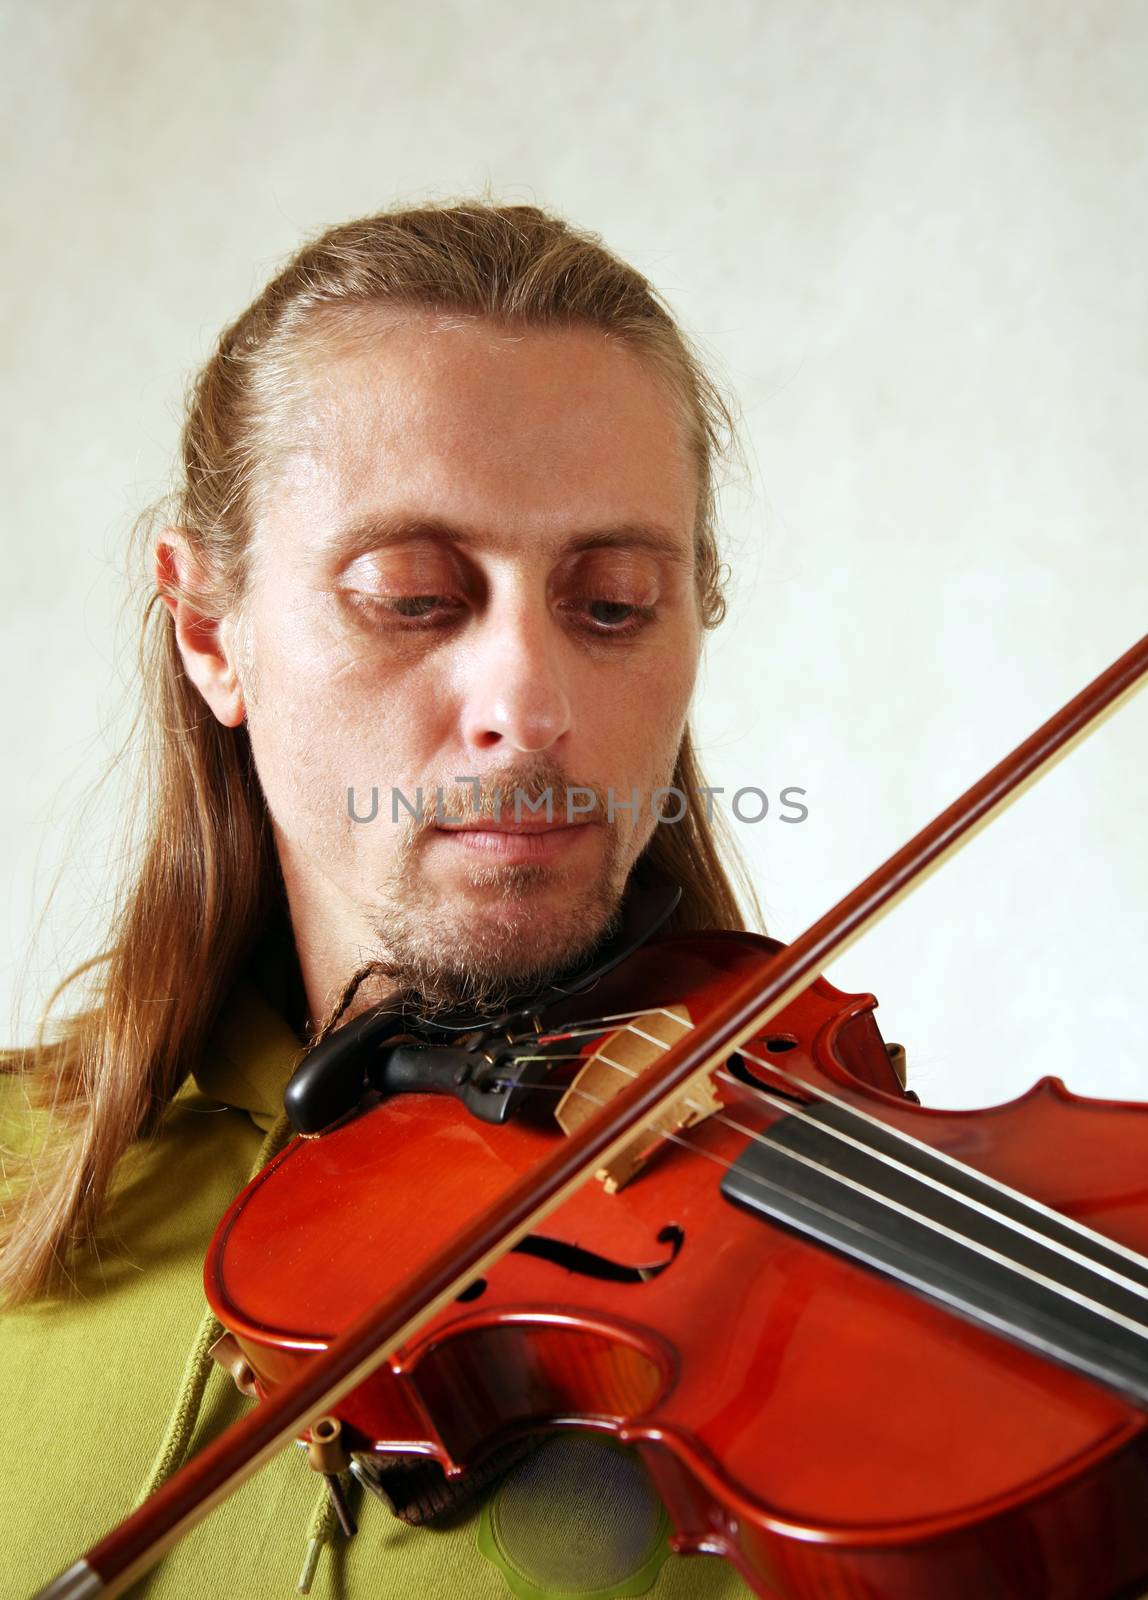 The man playing its violin close-up